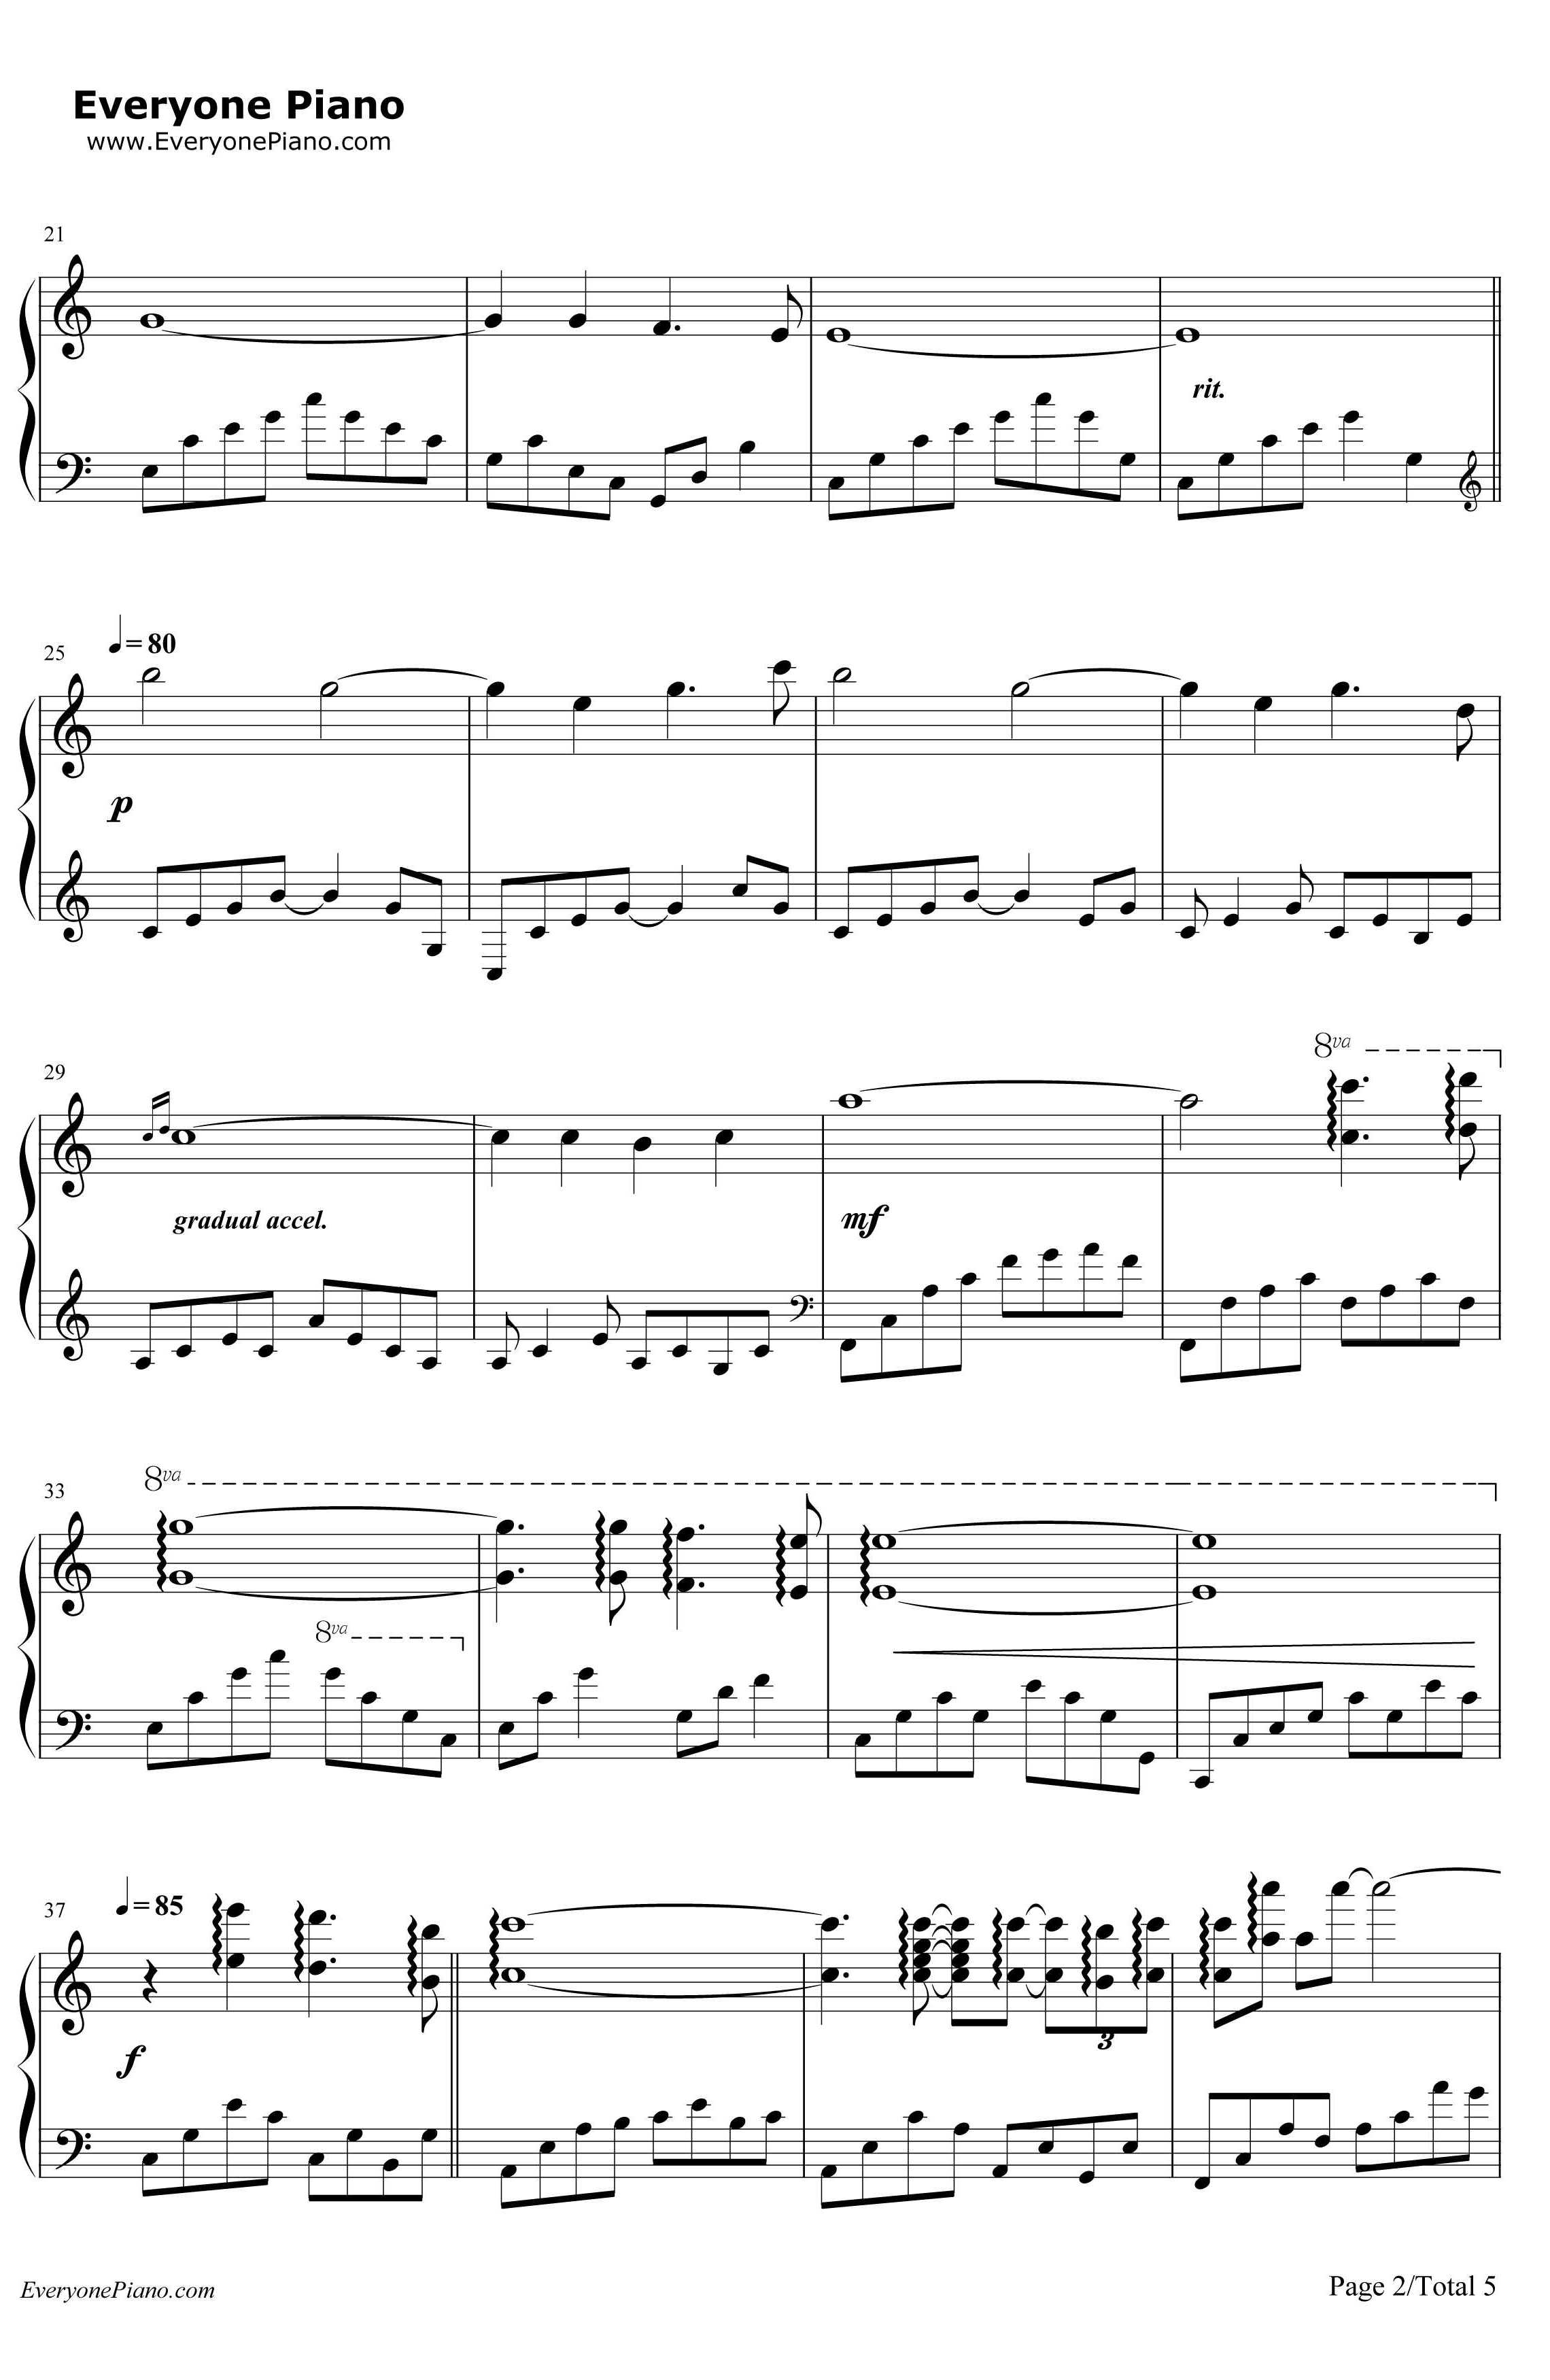 Gracefully钢琴谱-GiovanniMarradi(乔瓦尼)2